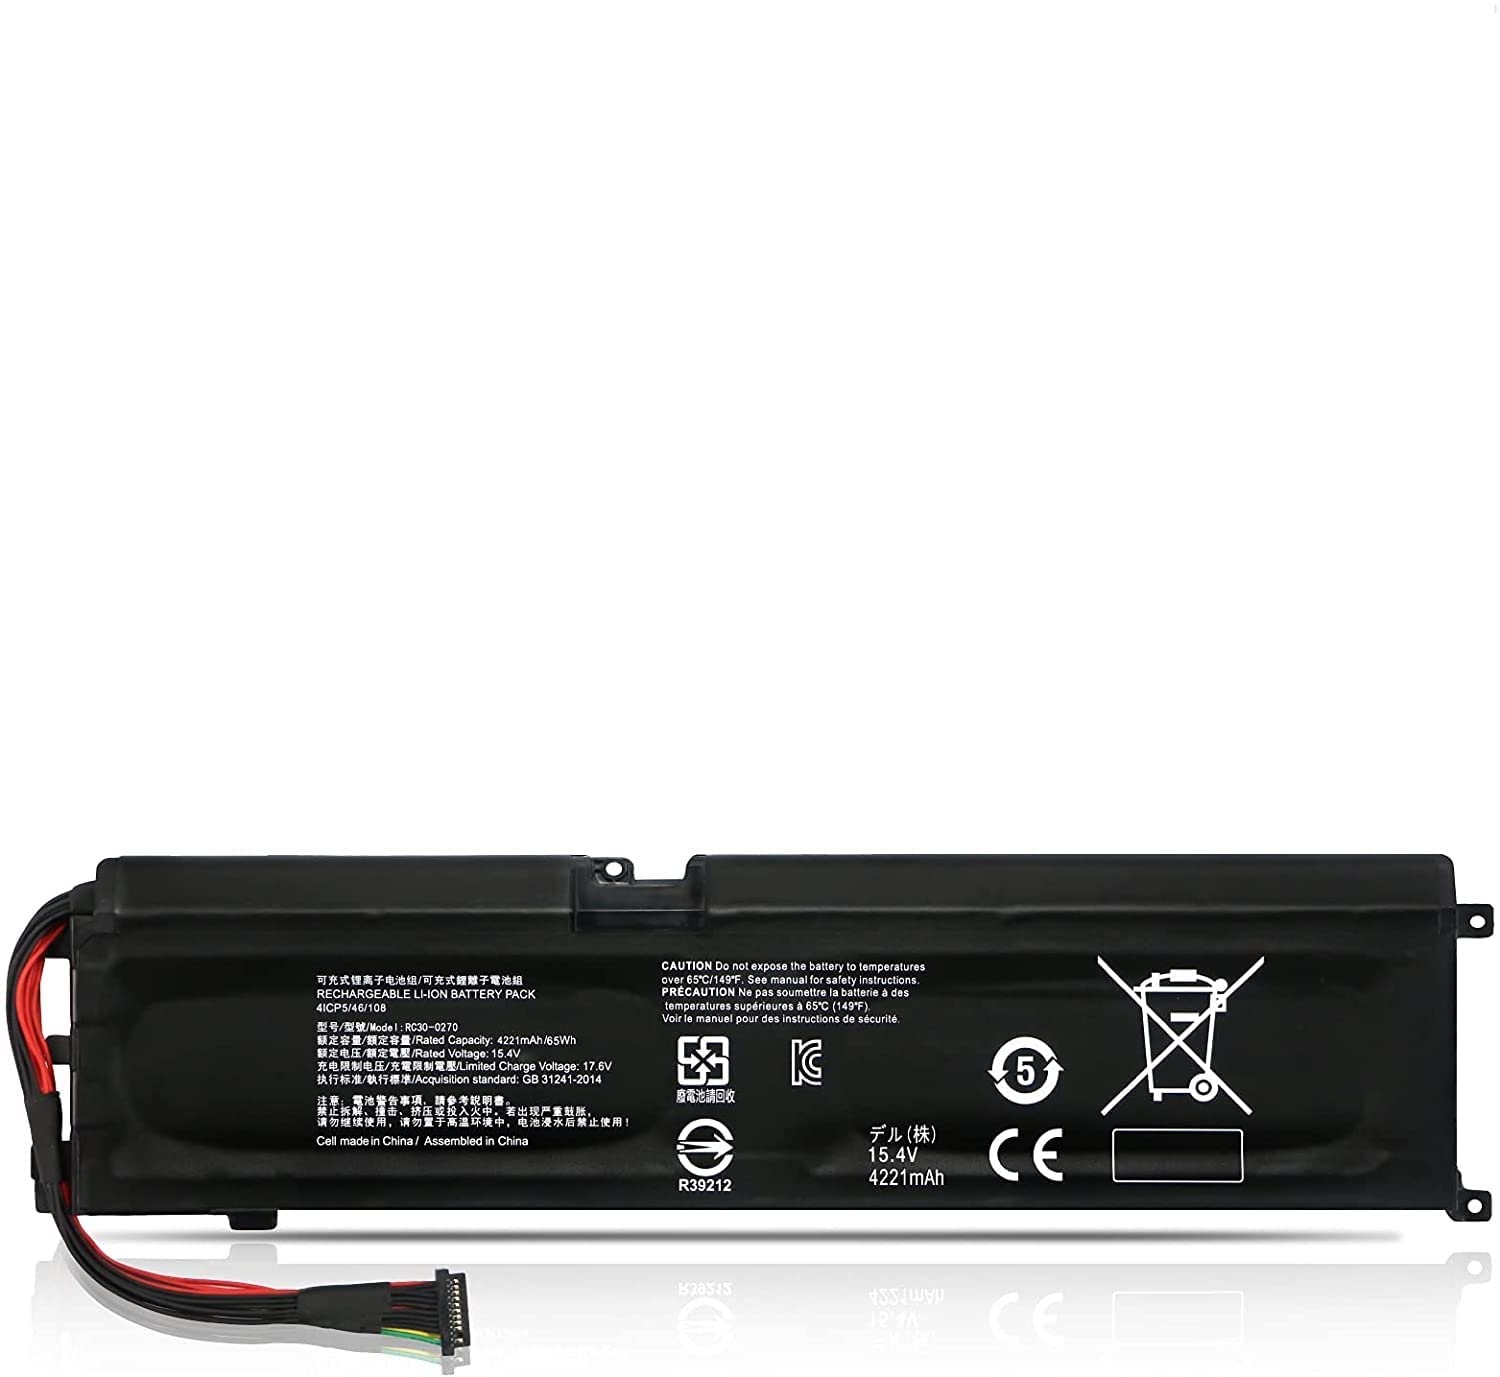 RC30-0270 Laptop Battery for Razer Blade 15 Base 2018 2019 GTX 1660 Ti RZ09-0270 RZ09-02705E76 RZ09-02705E76-R3U1 RZ09-02705E75-R3U1 RZ09-0300 RZ09-03006 RZ09-03009 RZ09-03006E92 15.4V 65Wh